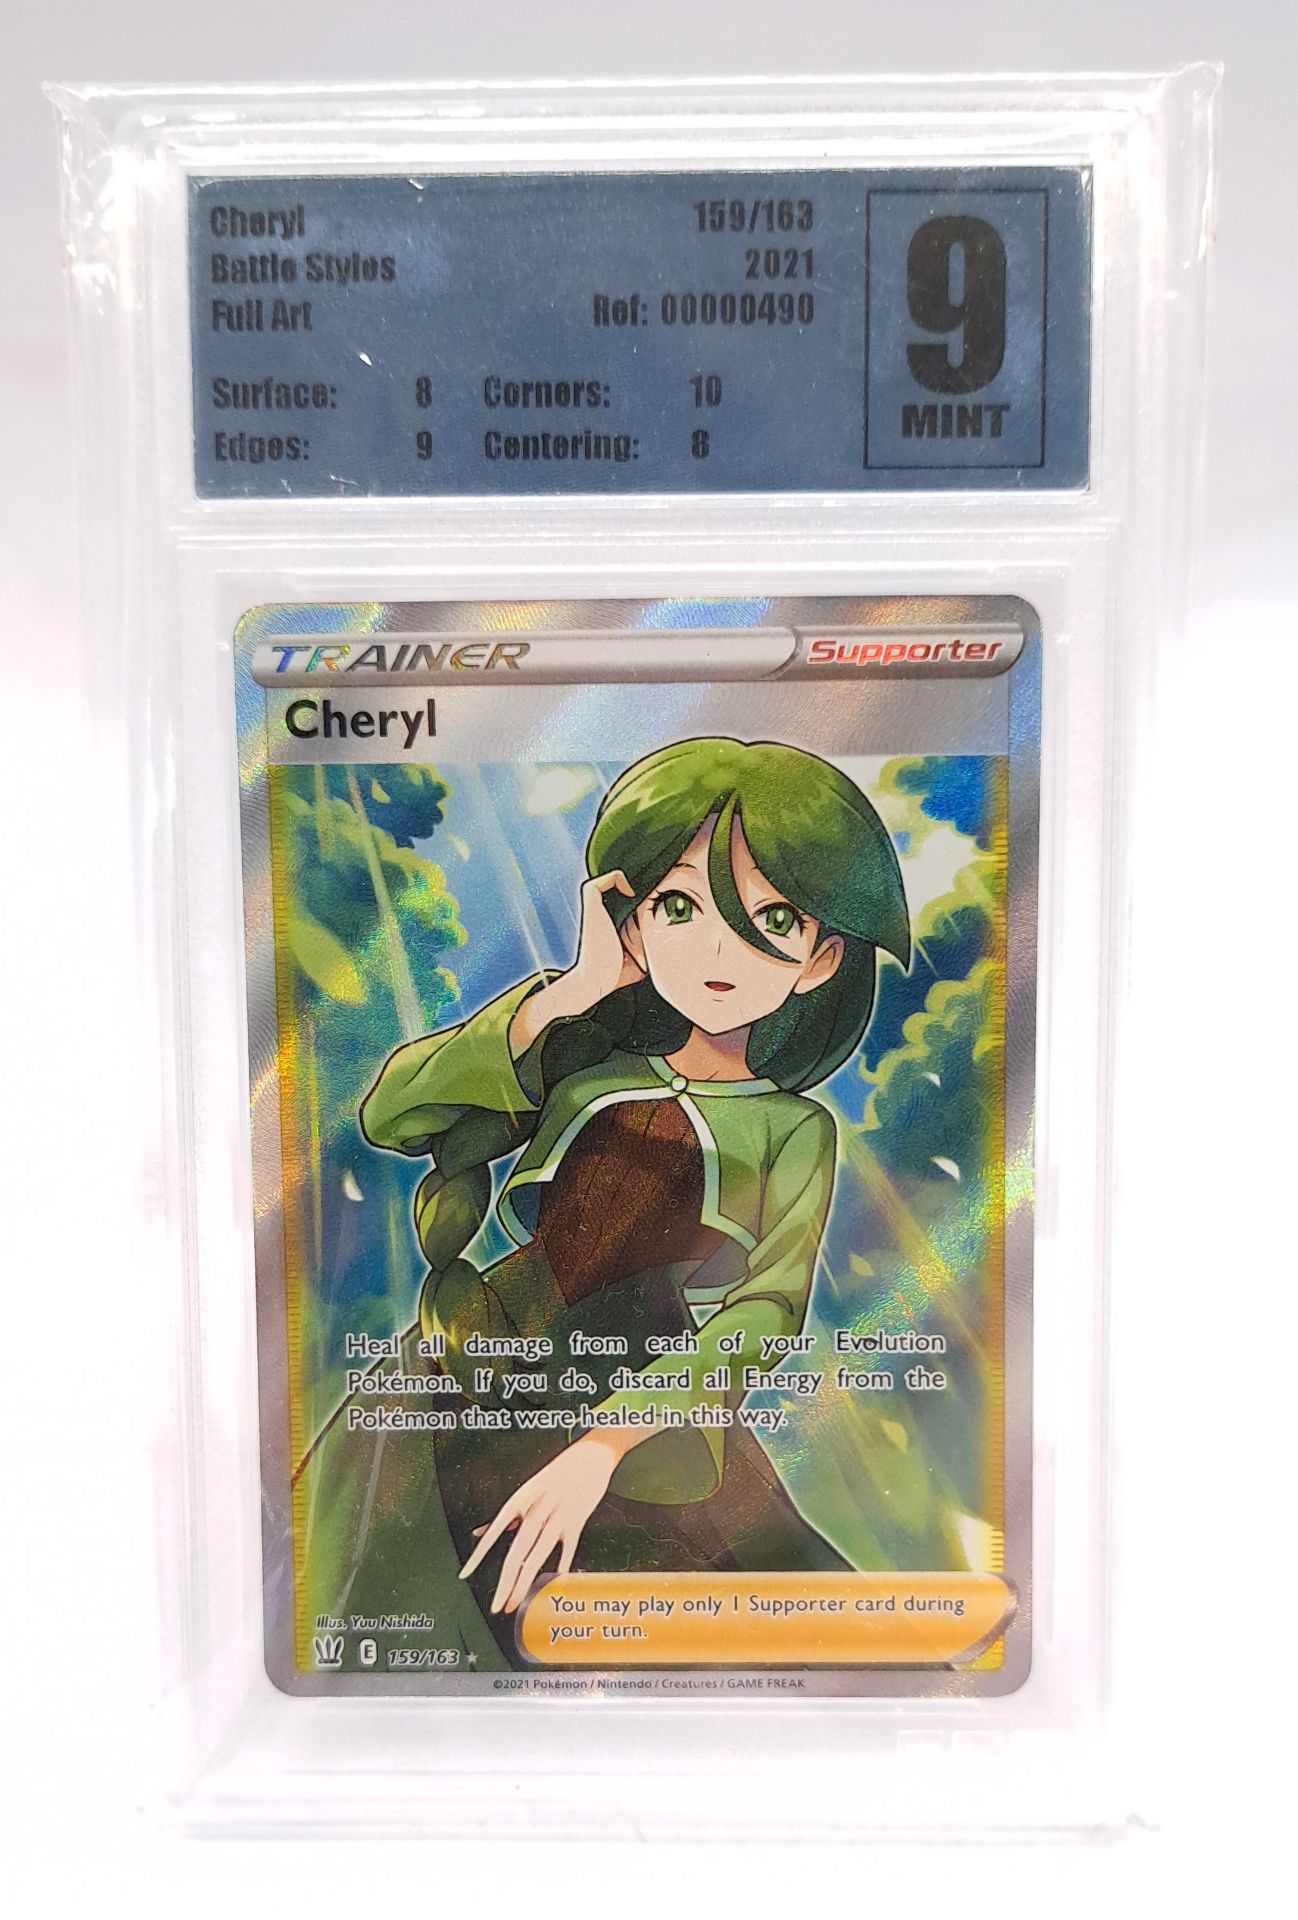 Pokémon Battle Style (2021) Cheryl Trainer Full Art Graded Trading Card. Grade 9 by Platinum Card...